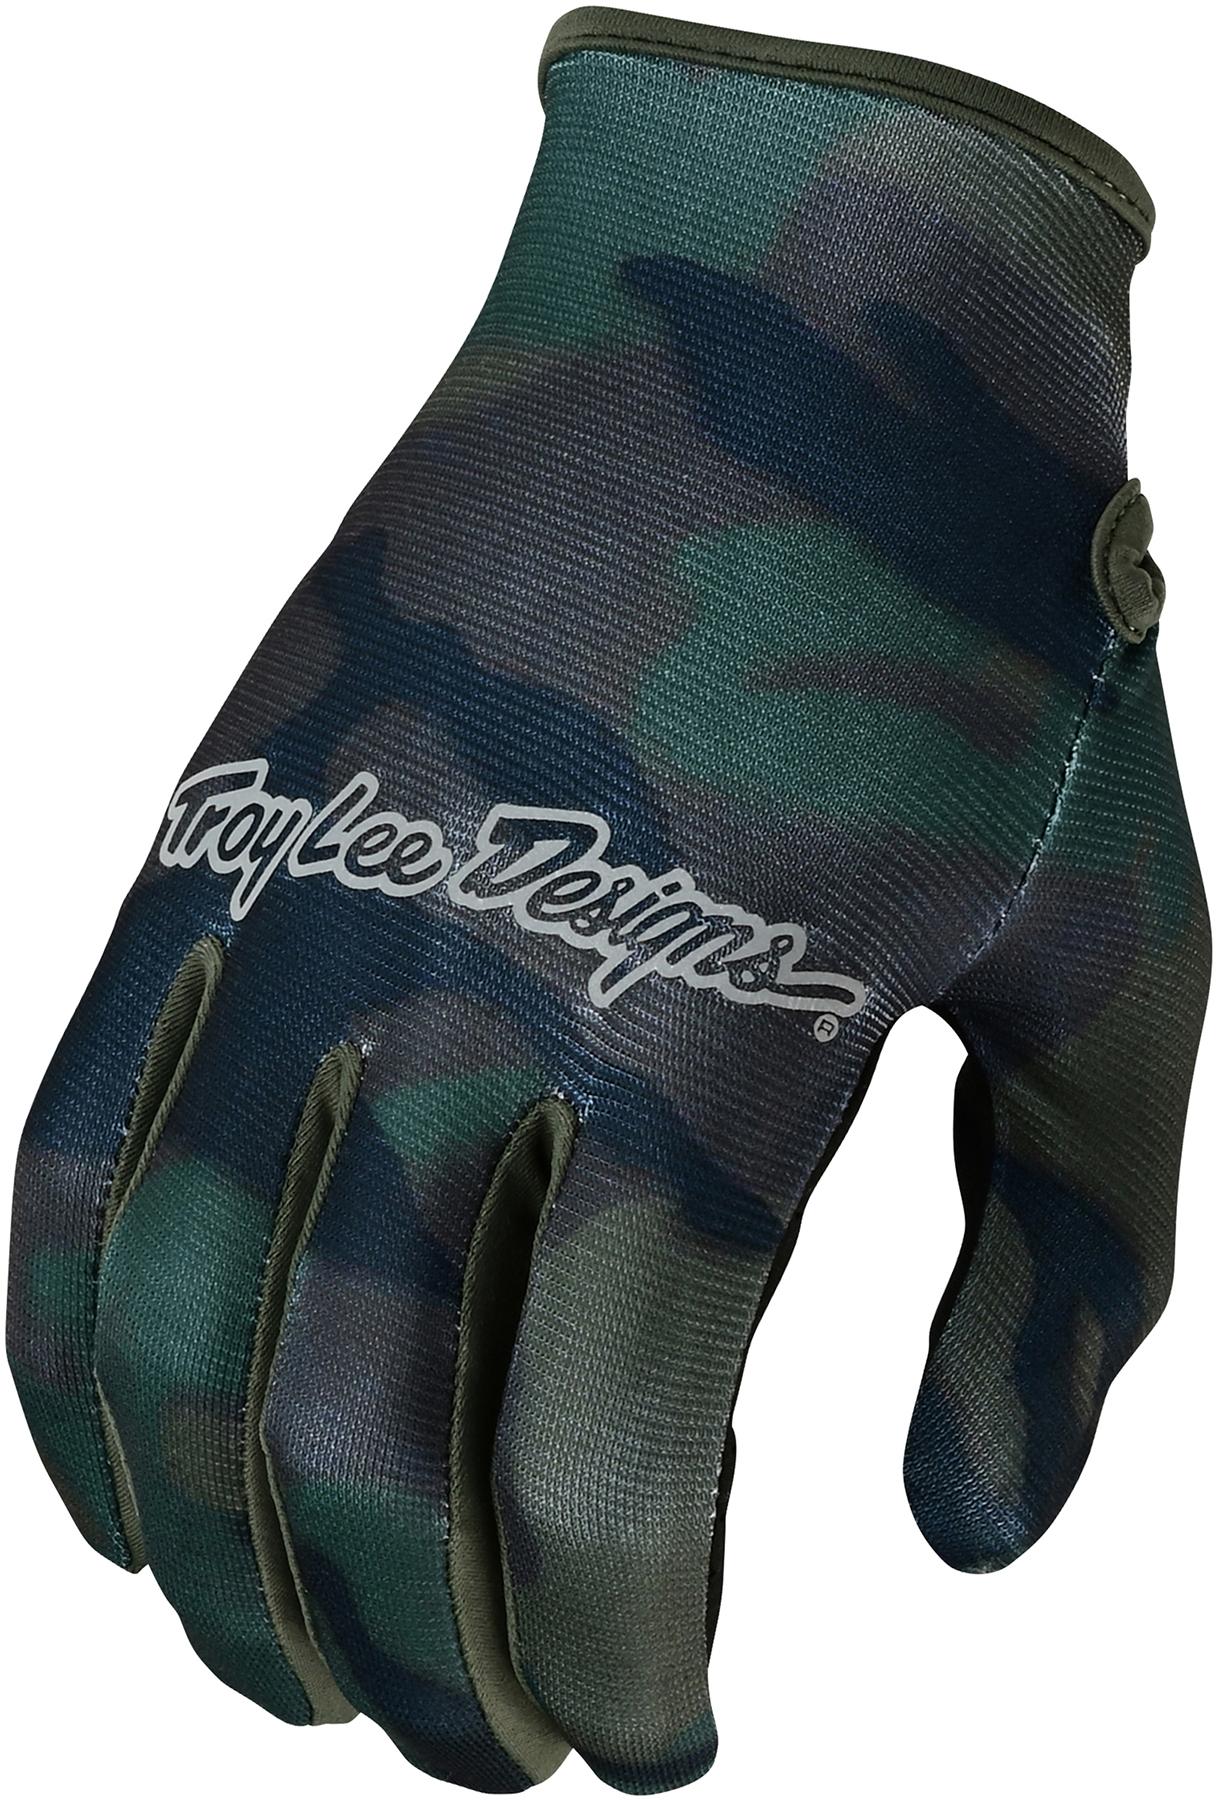 Troy Lee Designs Flowline Gloves - Army Green